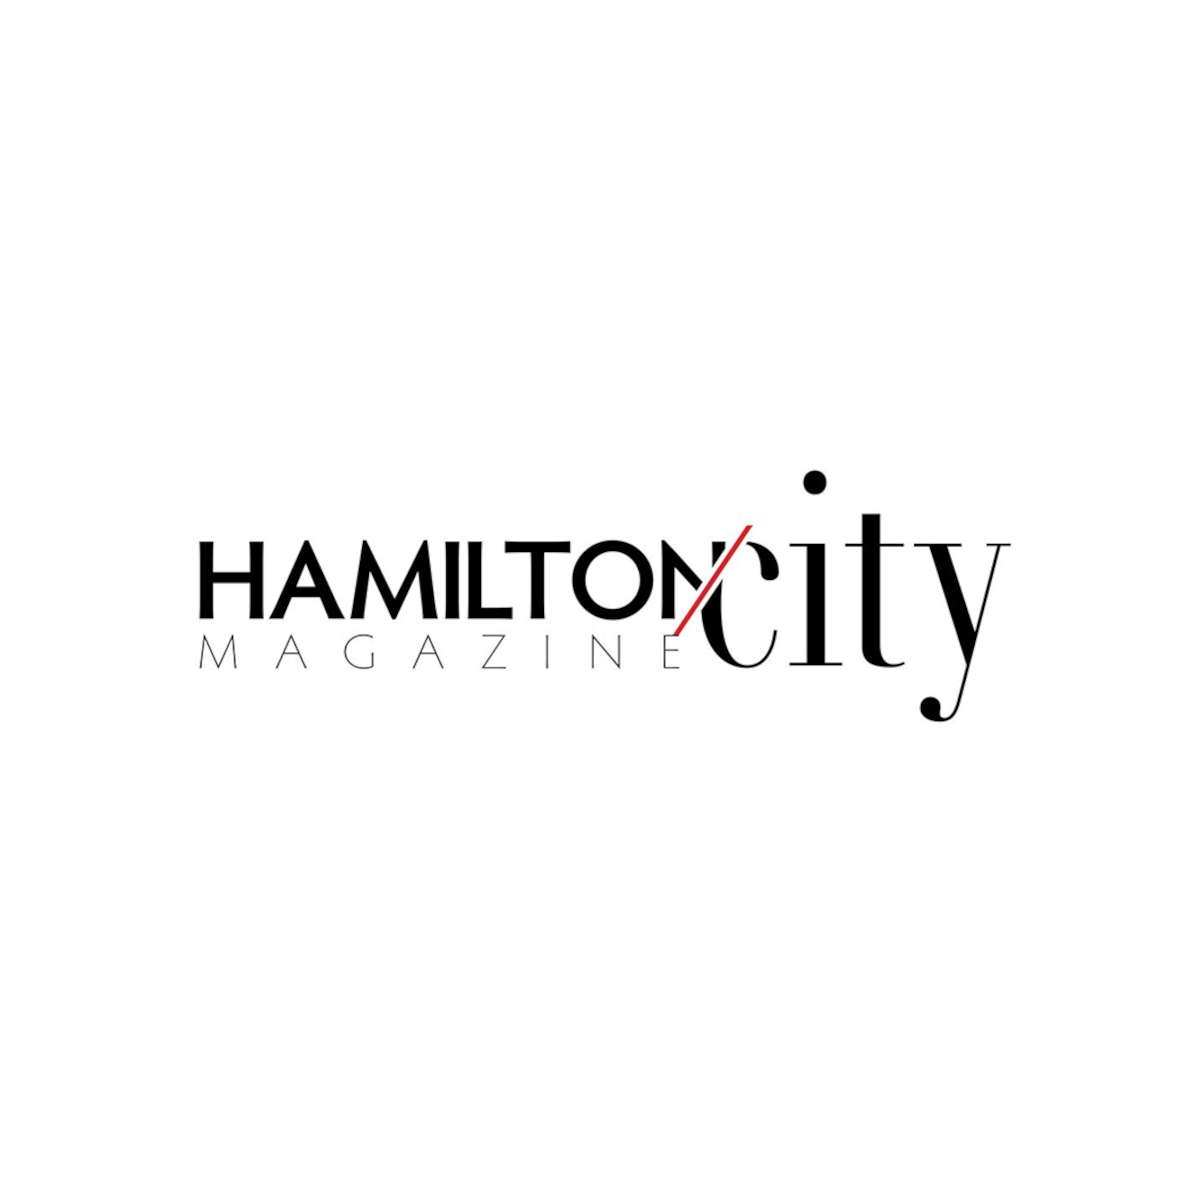 Hamilton City Magazine